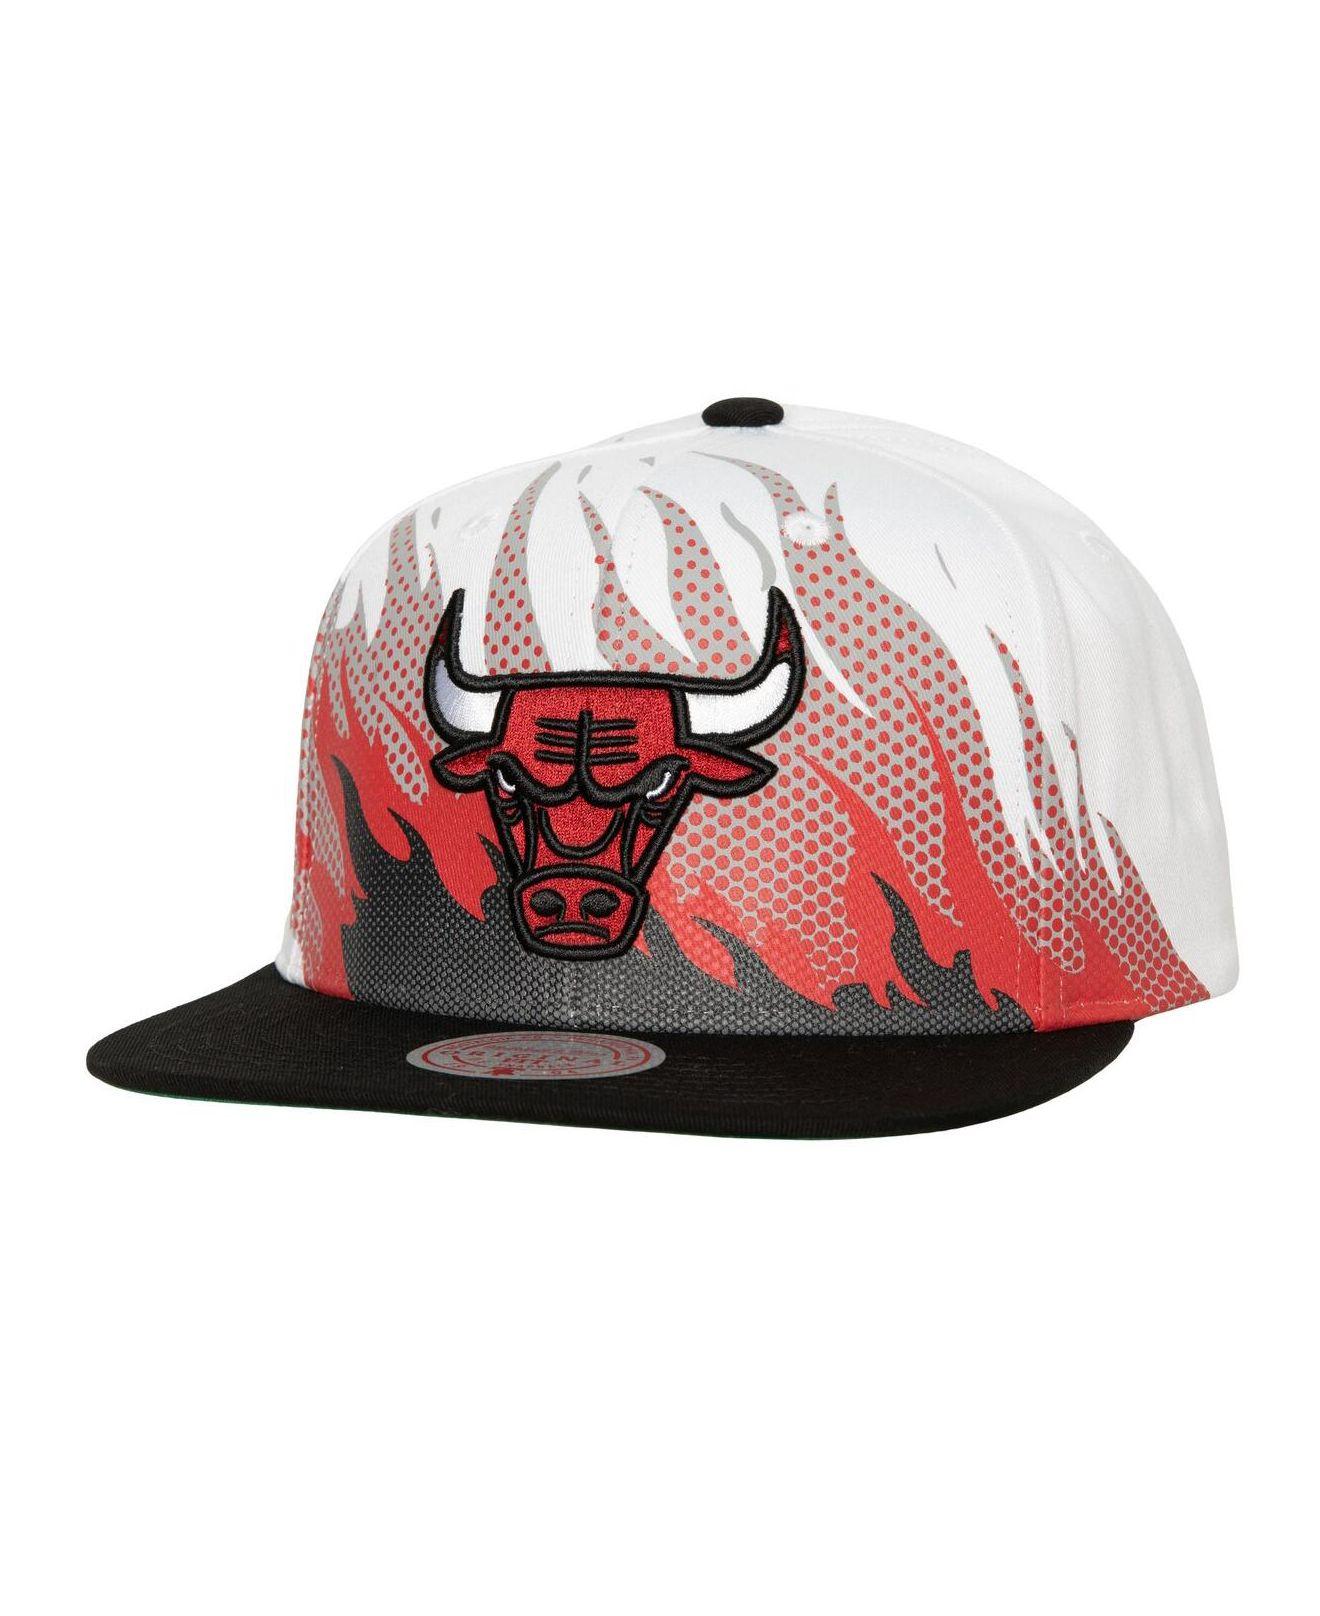 Lids Chicago Bulls Mitchell & Ness 50th Anniversary Snapback Hat - Red